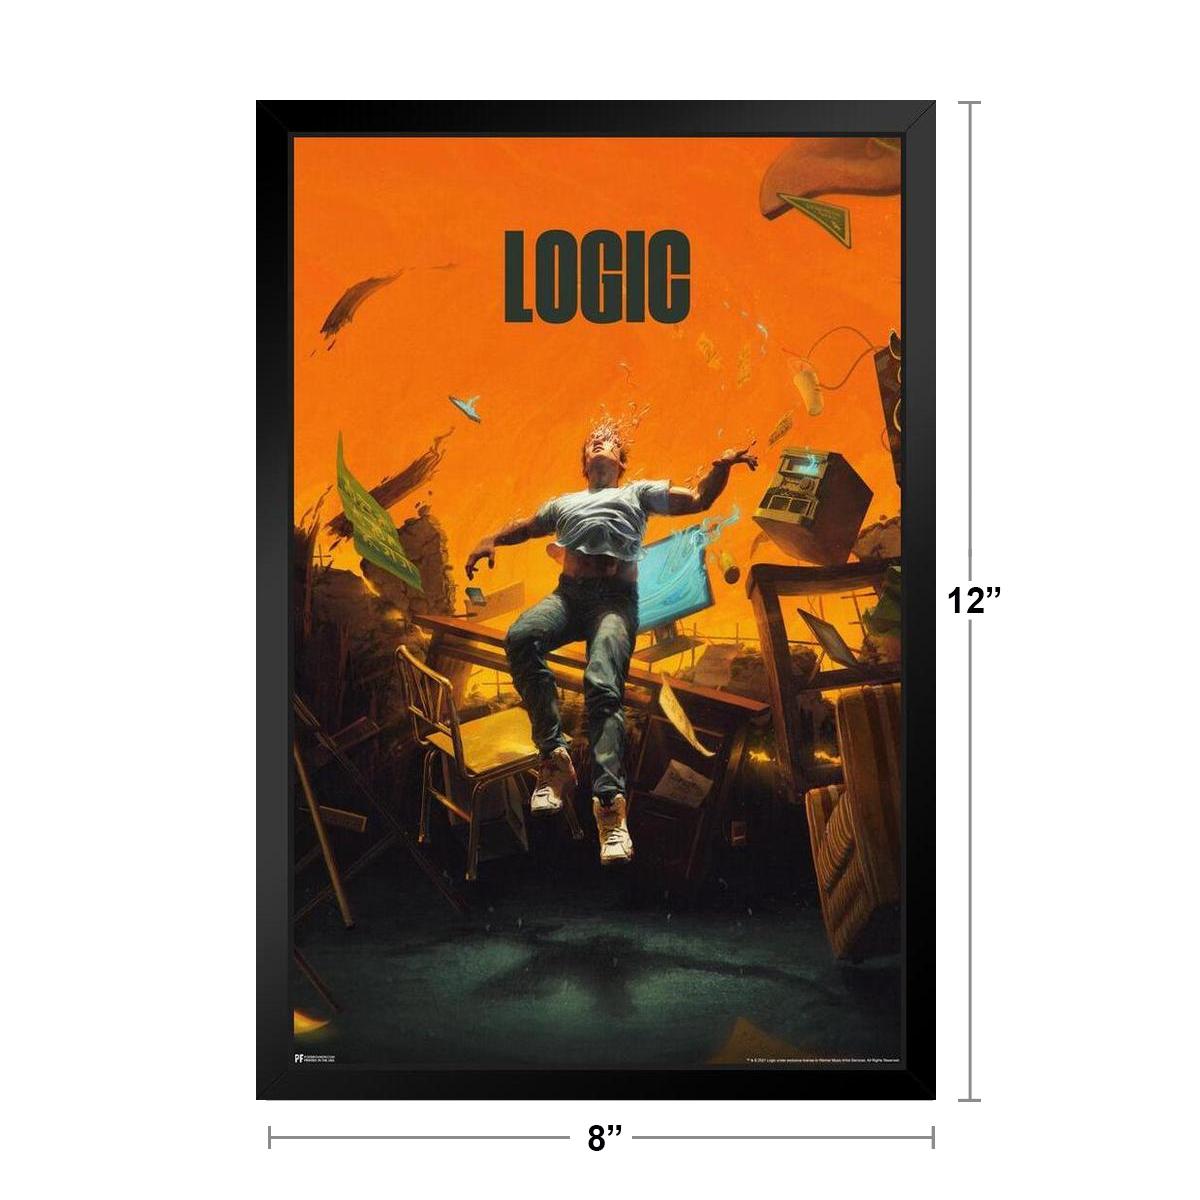 Logic Album Cover Wallpapers